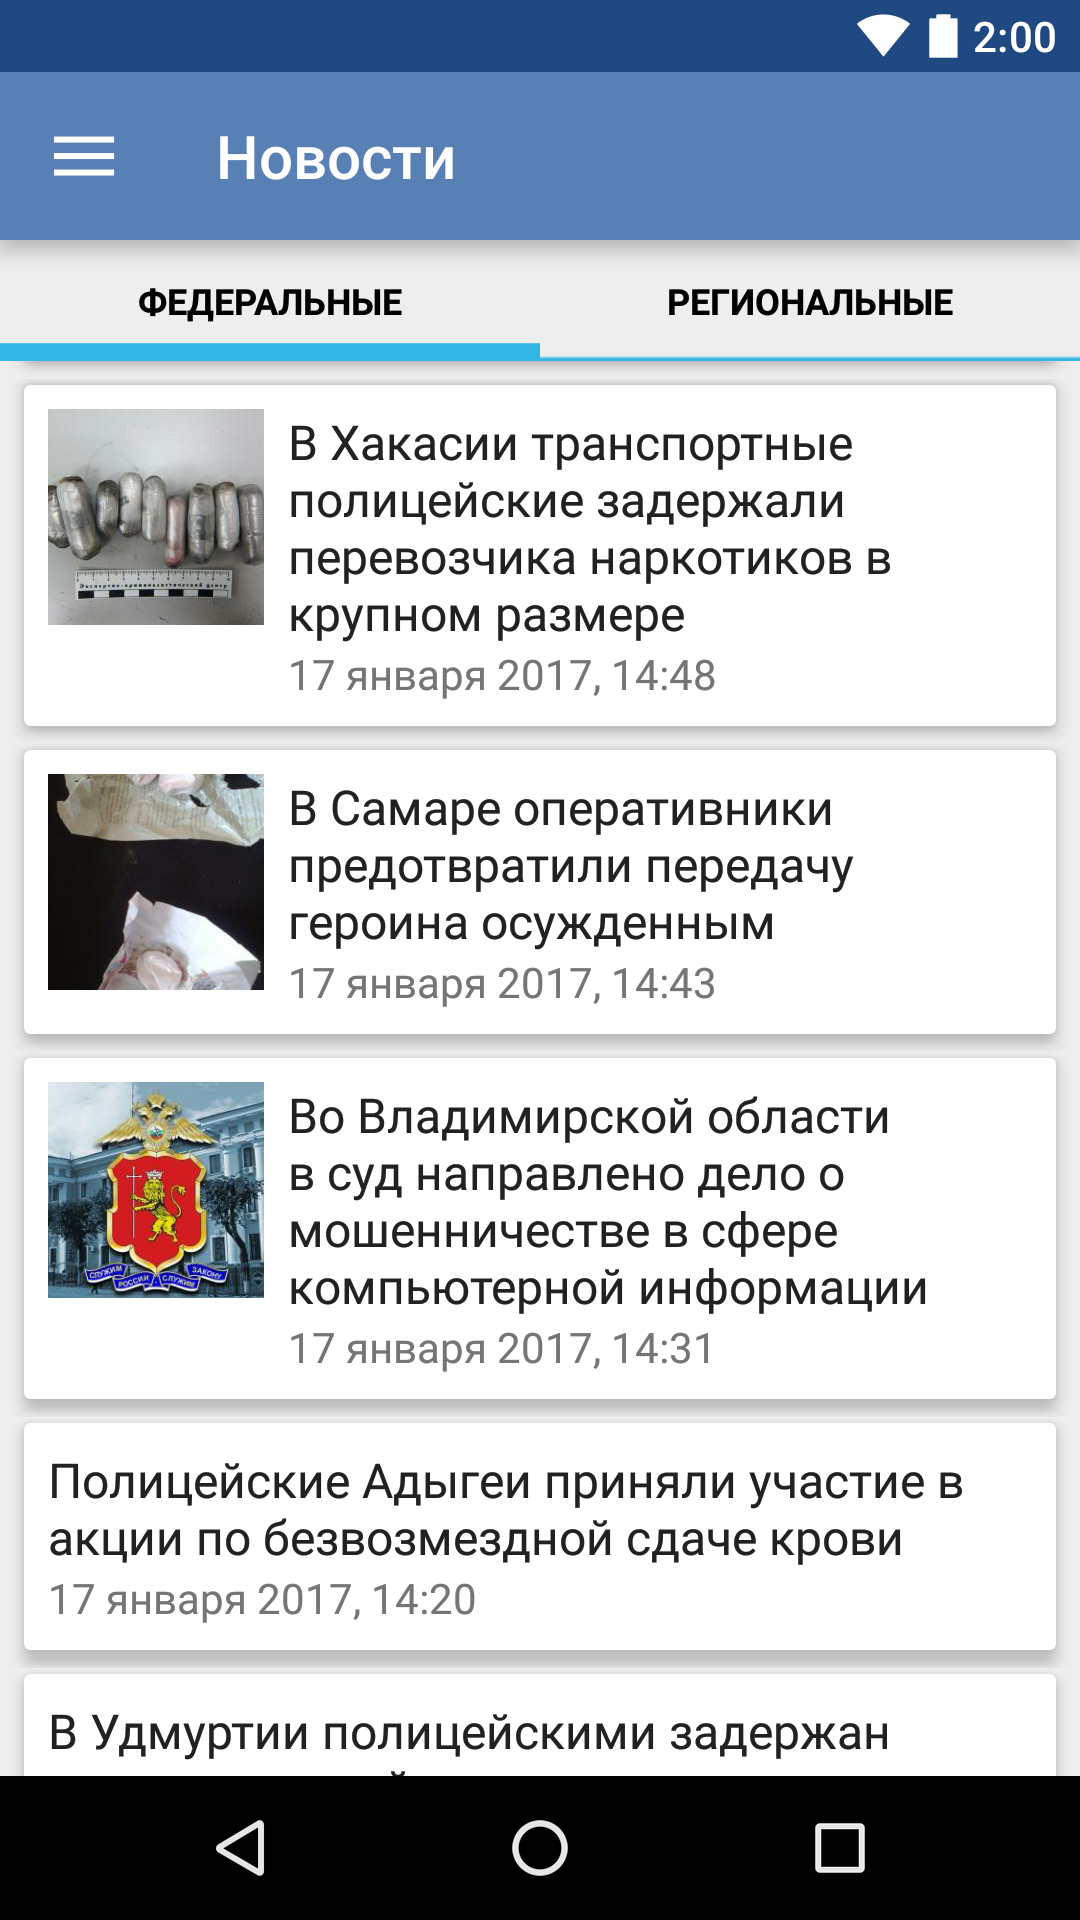 Android application МВД РОССИИ screenshort